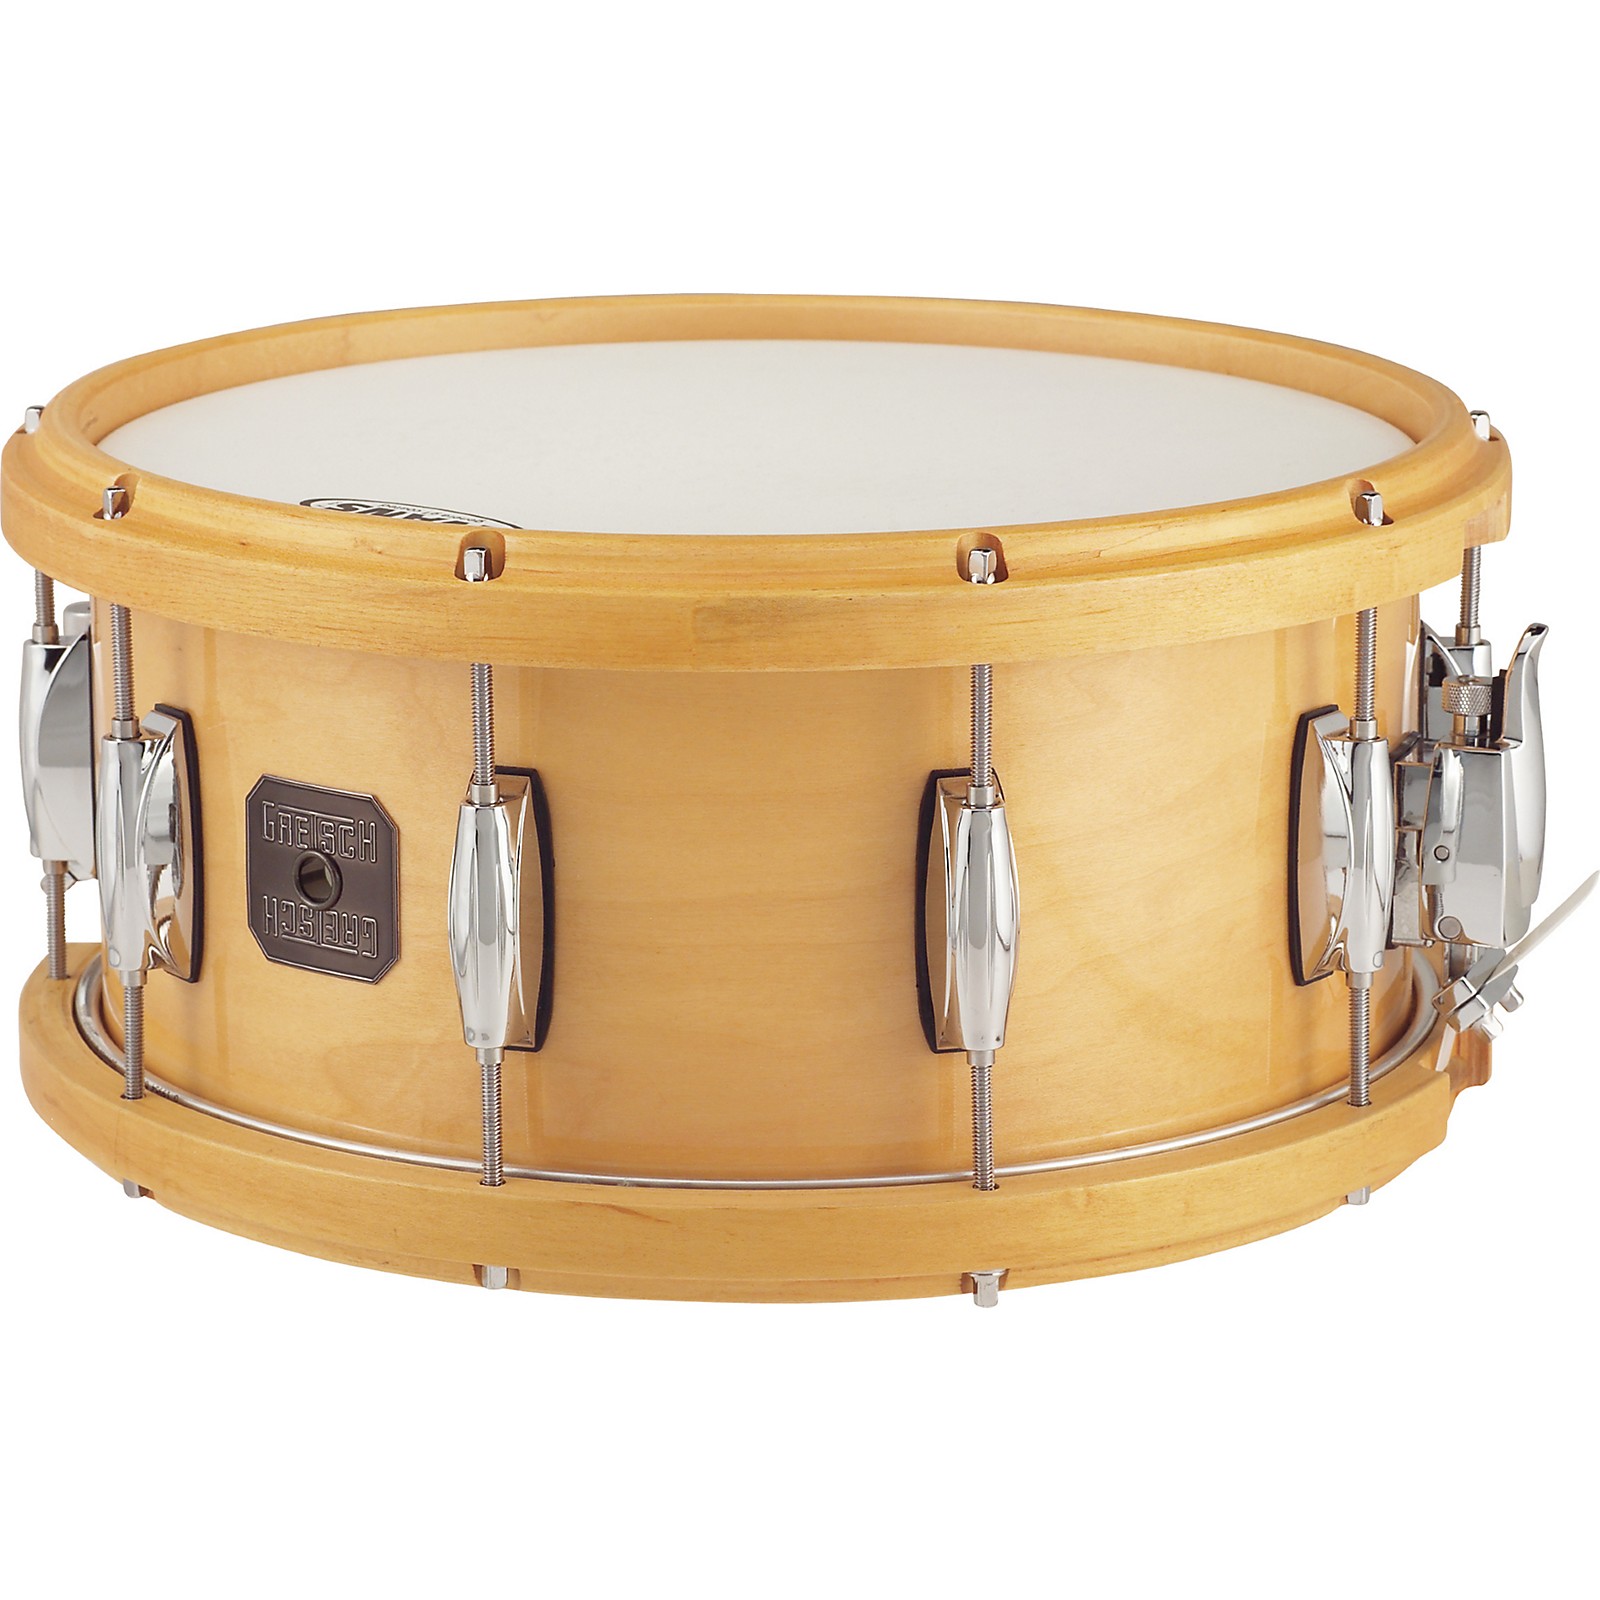 Gretsch Drums Full Range Maple Snare Drum With Wood Hoop Musicians Friend 